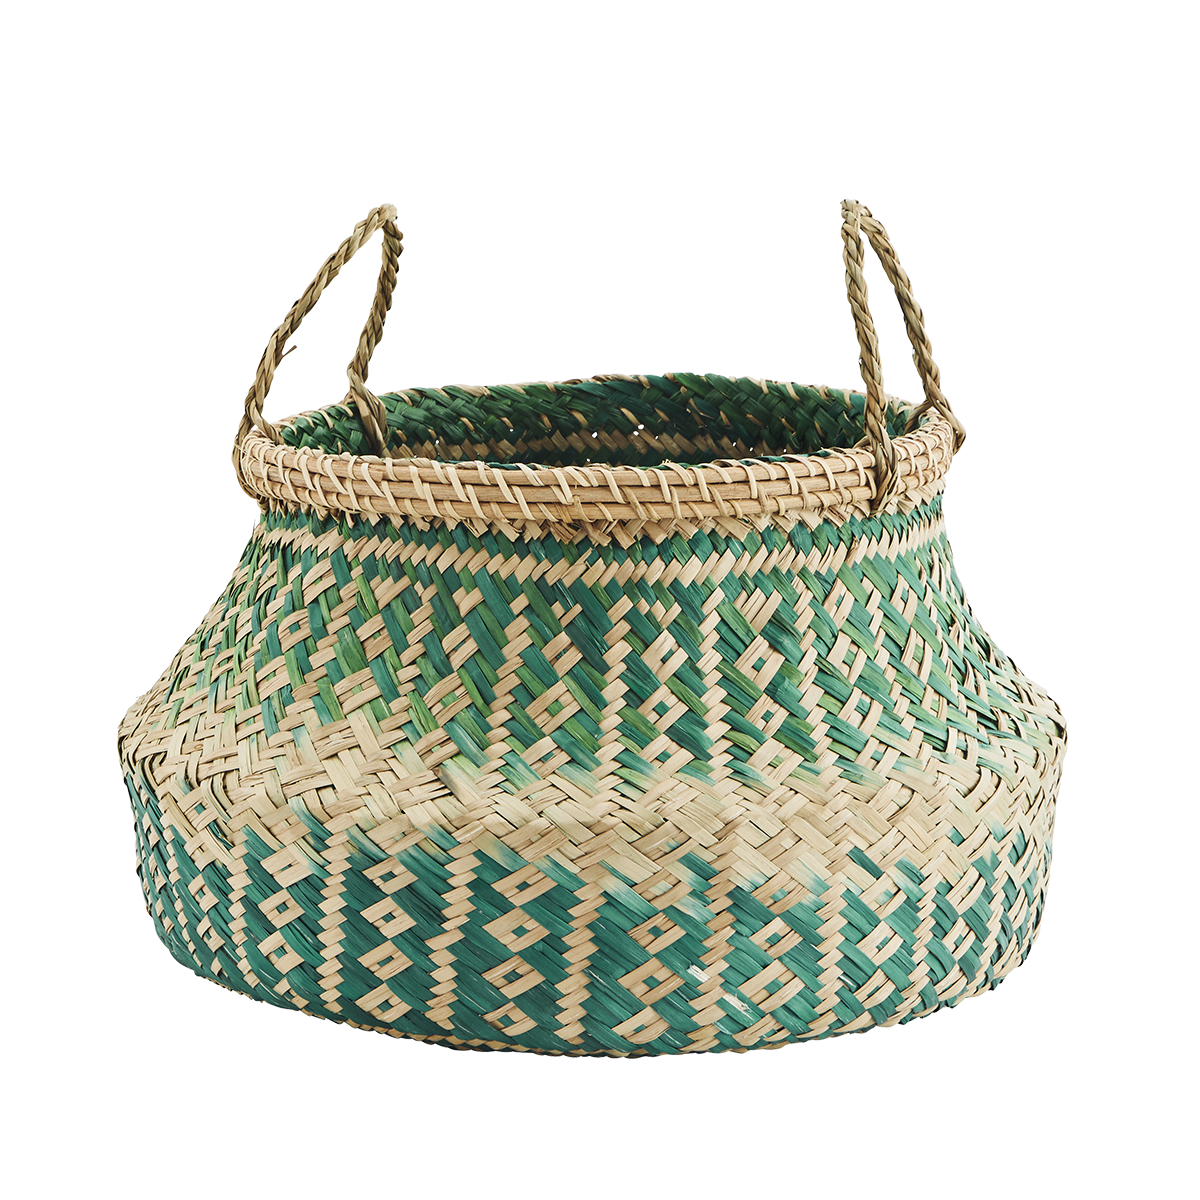 Seagrass basket w/ handles